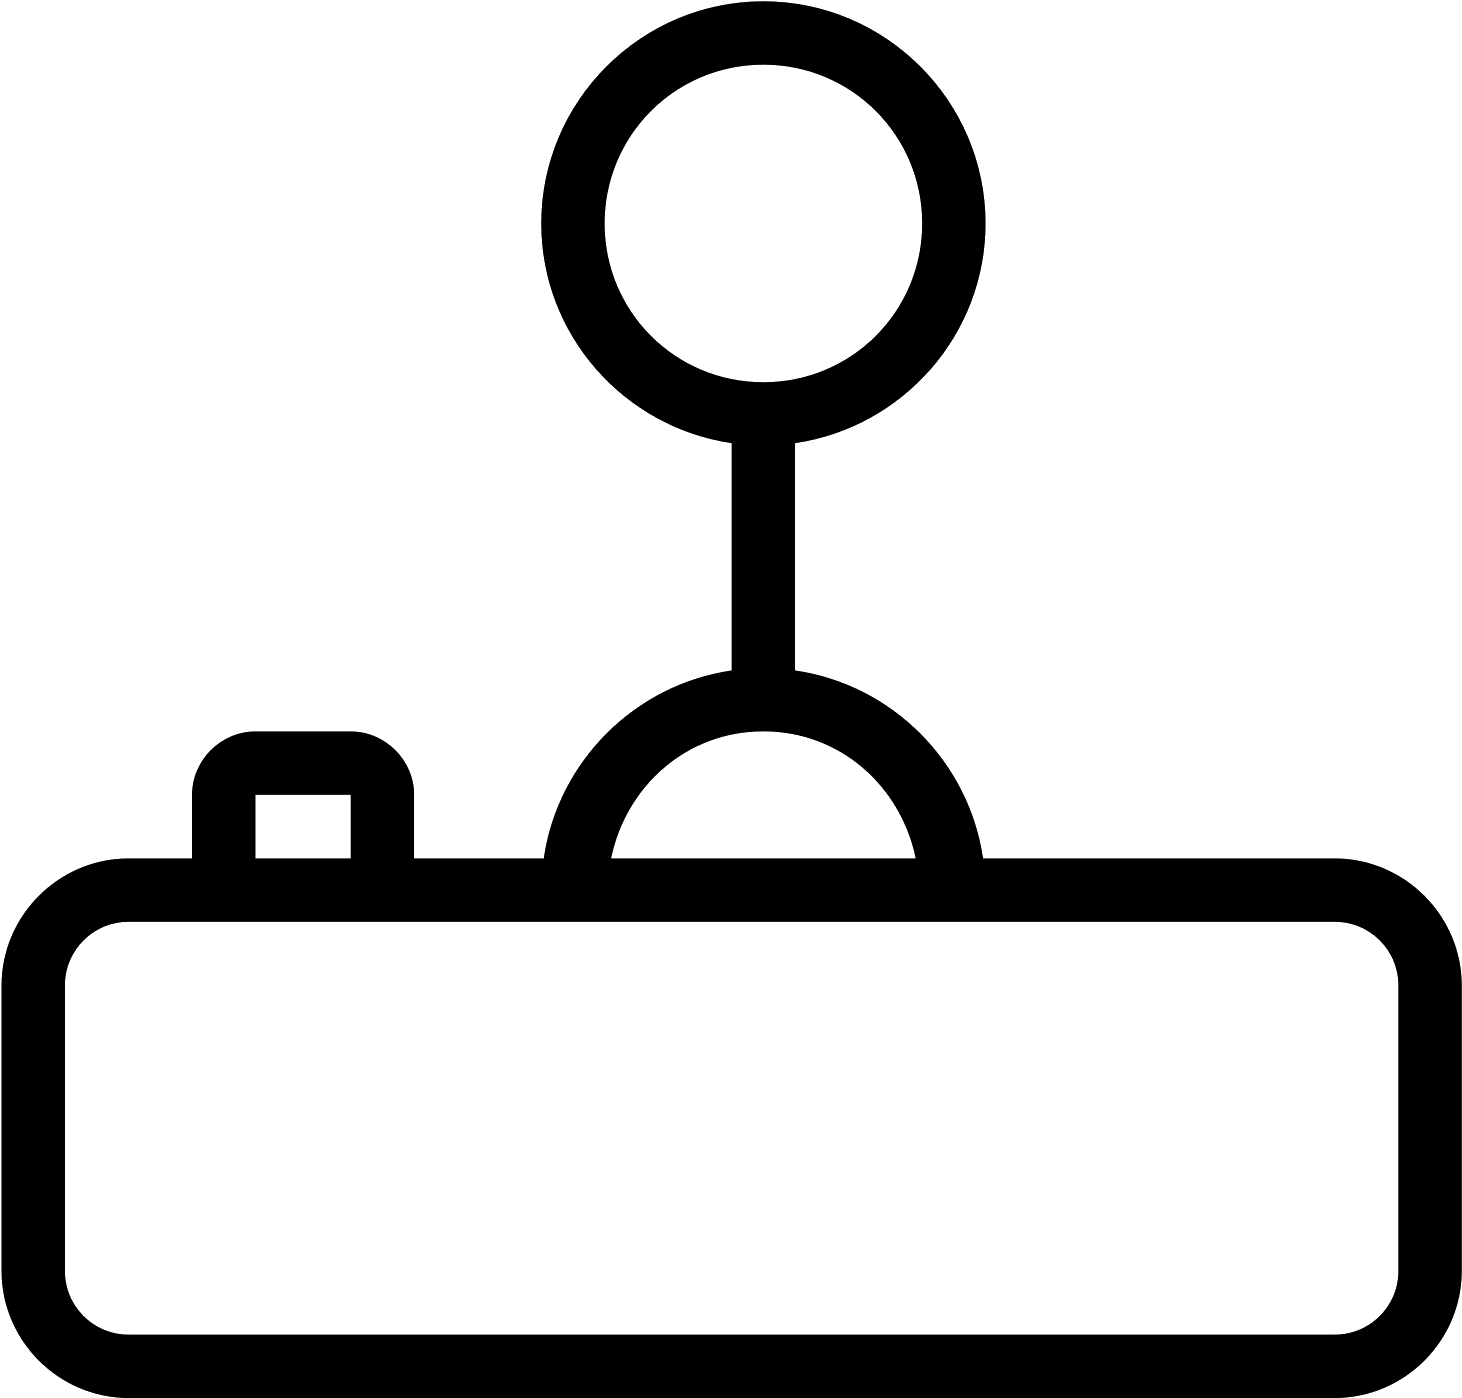 Classic Joystick Icon PNG image